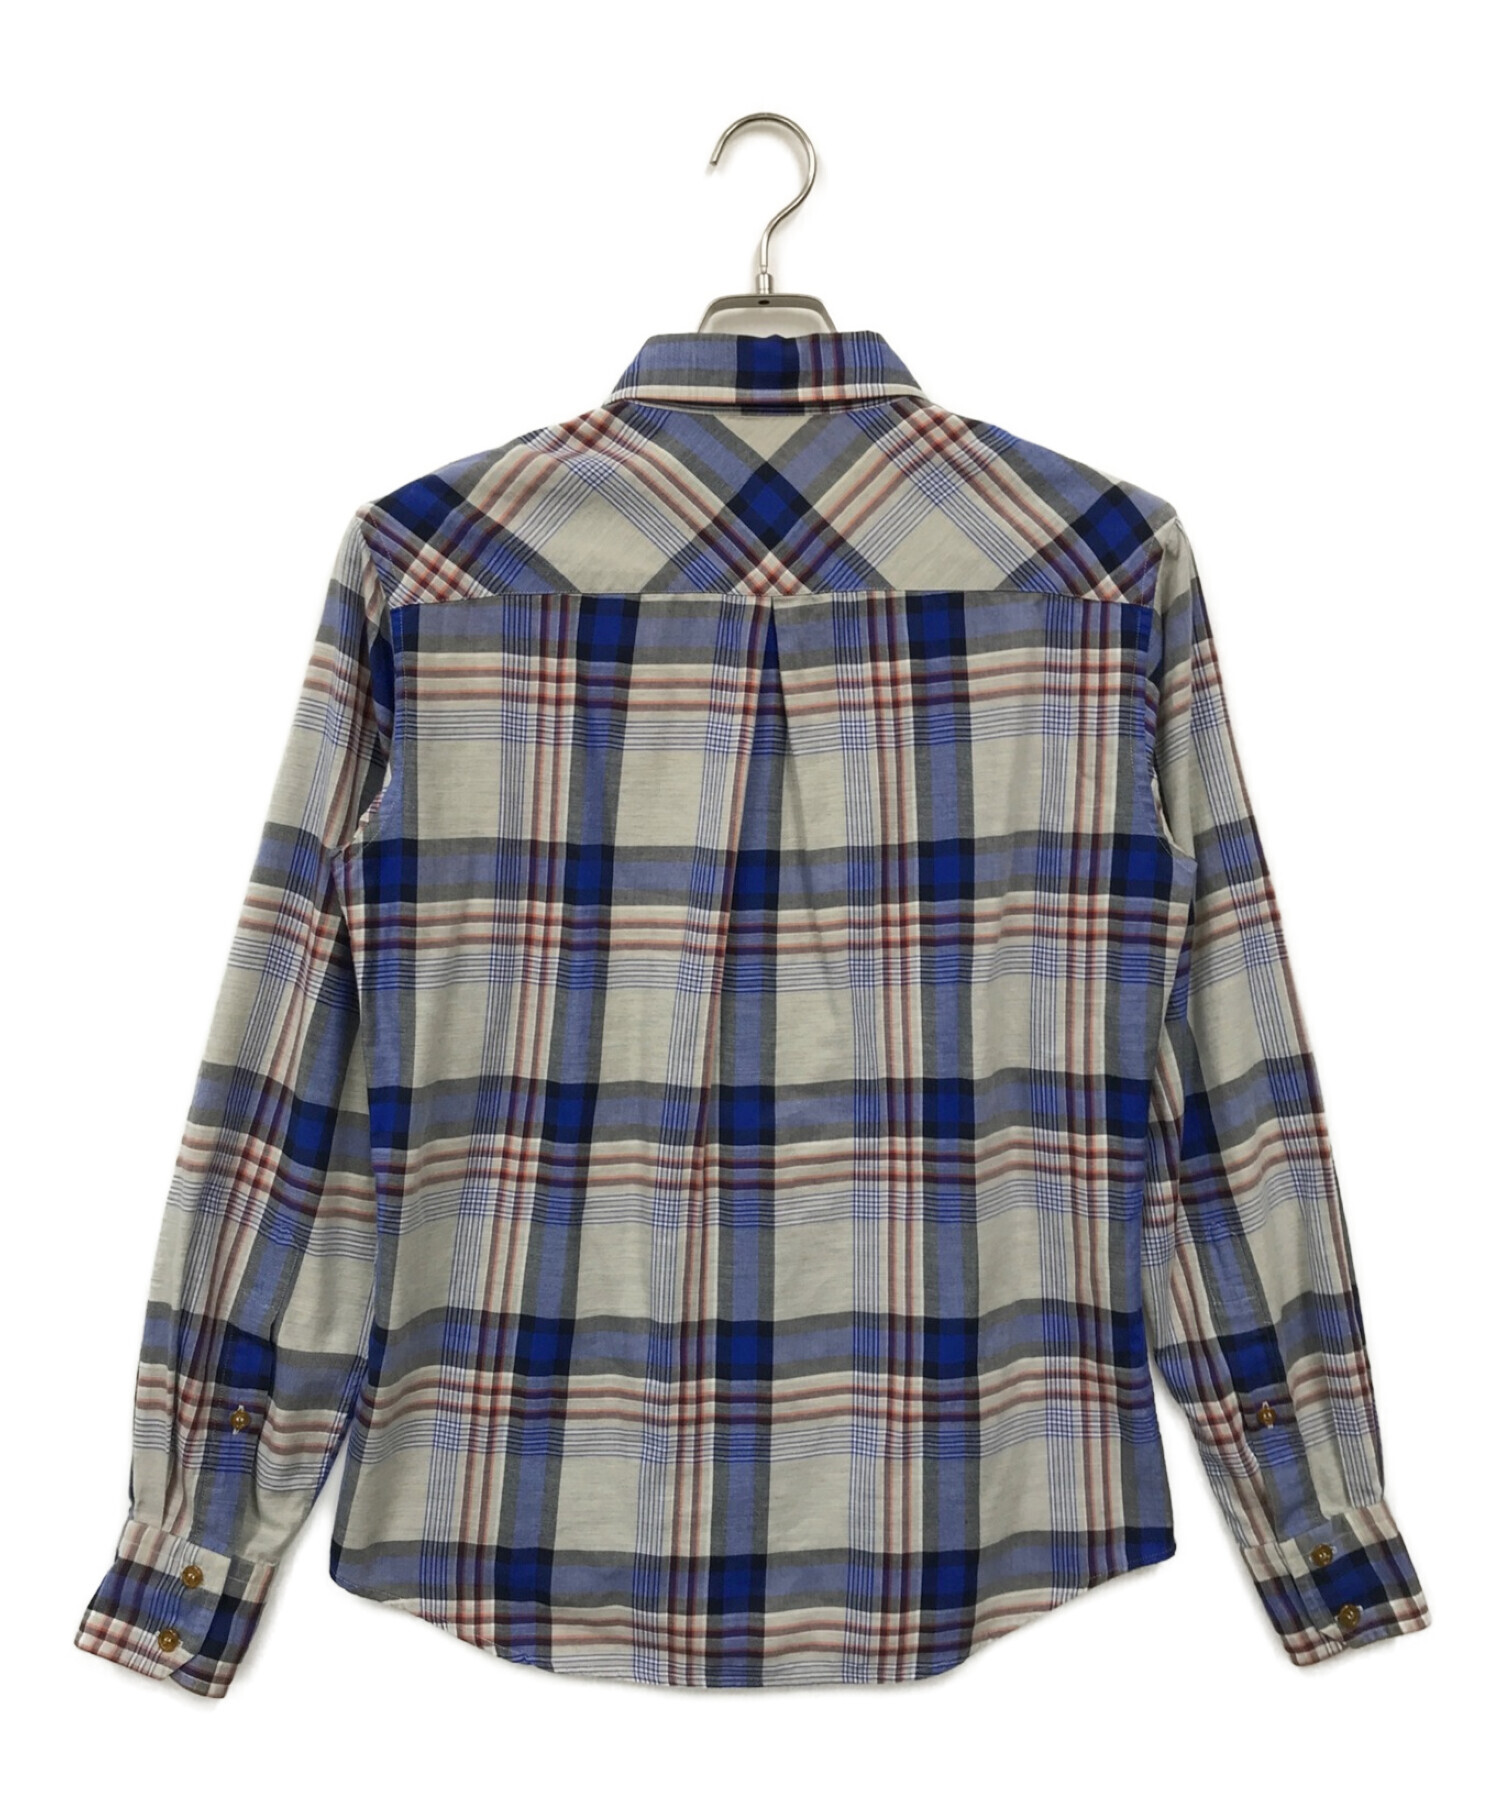 Vivienne Westwood man (ヴィヴィアン ウェストウッド マン) オーブ刺繍チェックシャツ グレー×ブルー サイズ:46